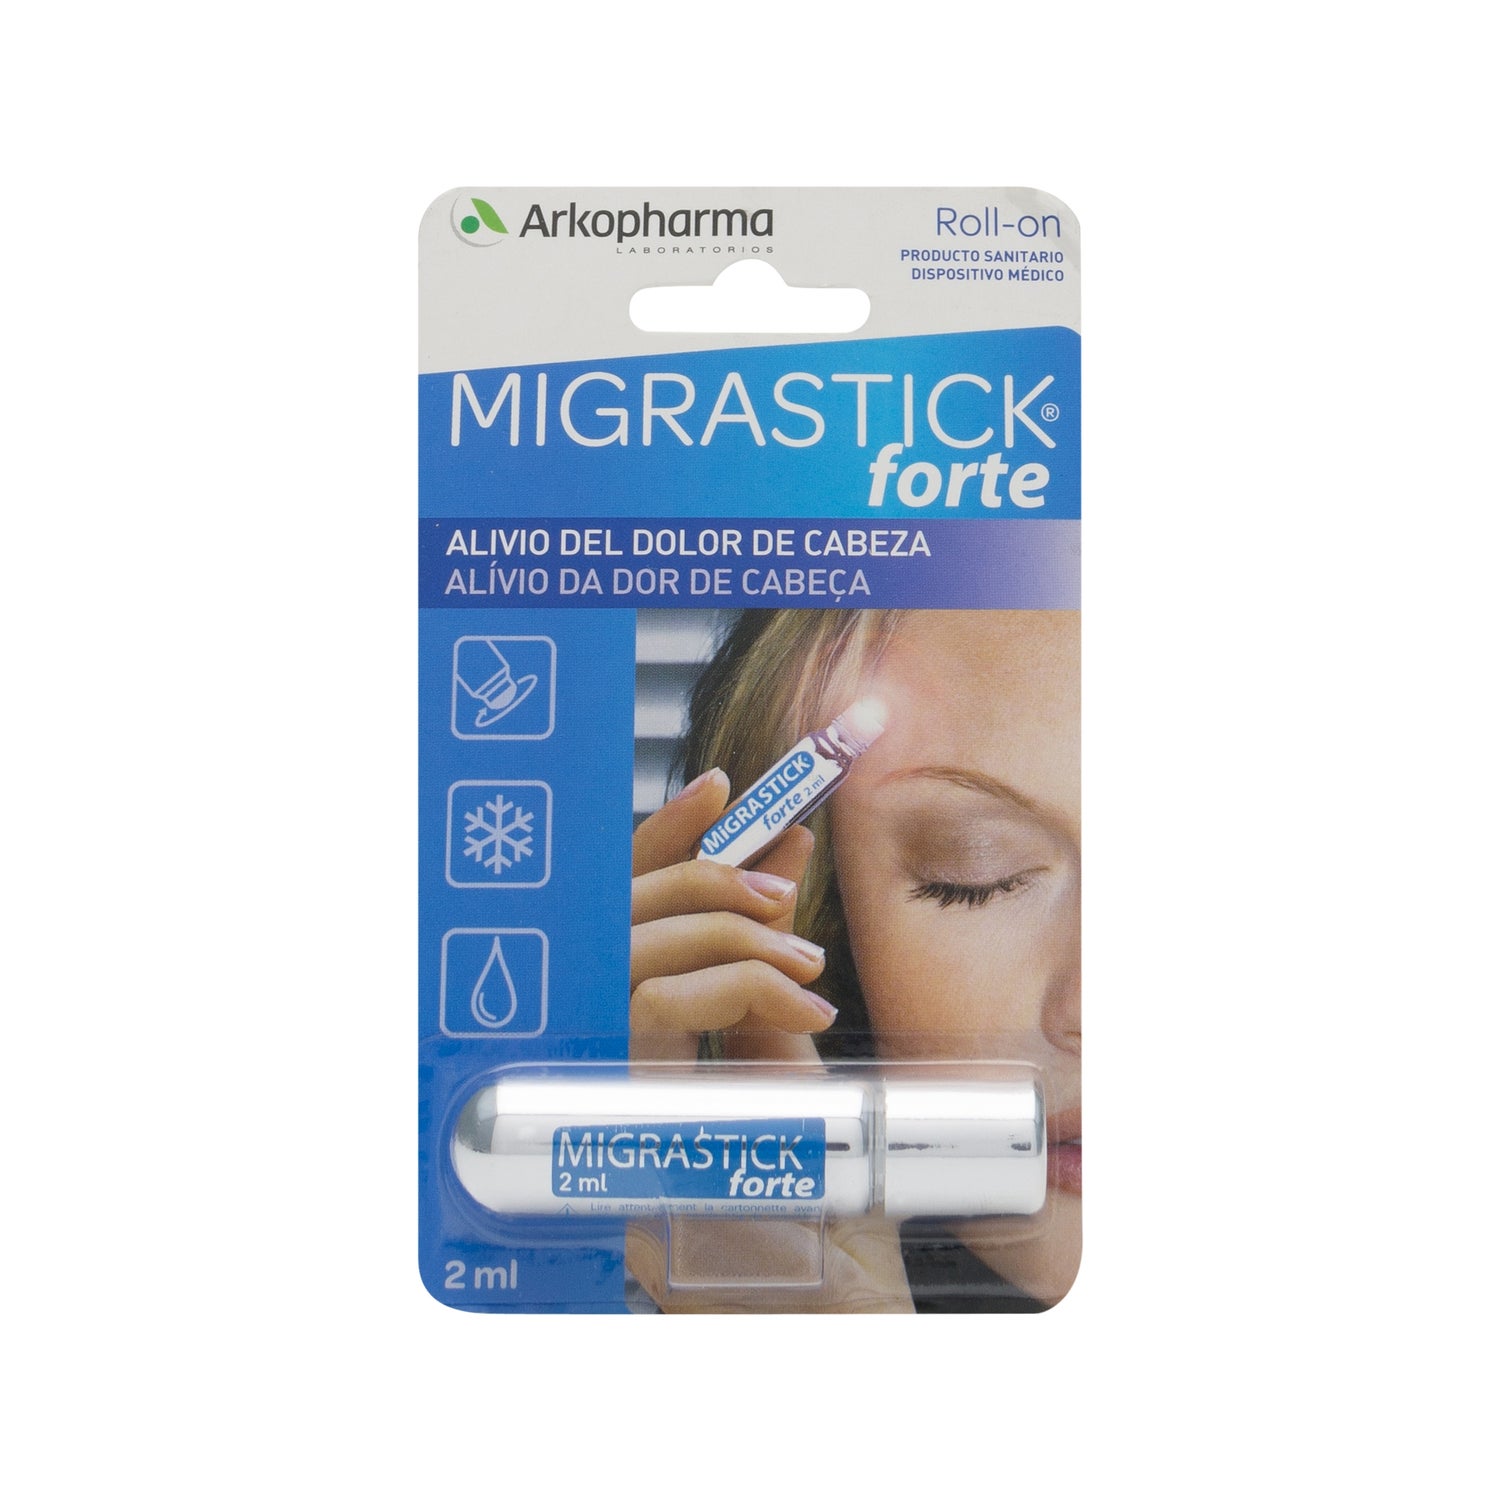 migrastick forte roll on 2ml